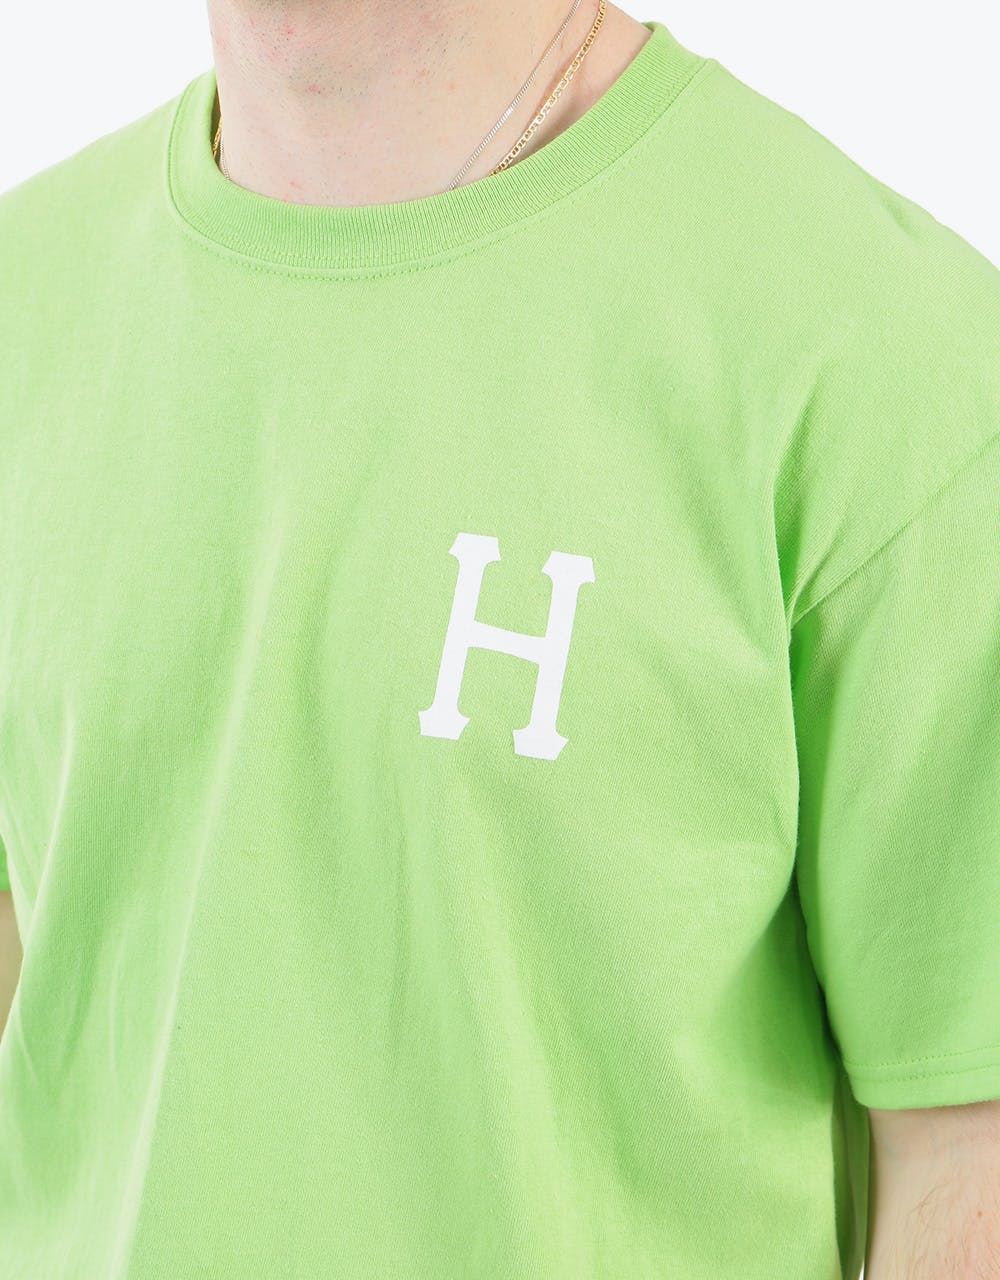 HUF Classic H T-Shirt - Hot Lime